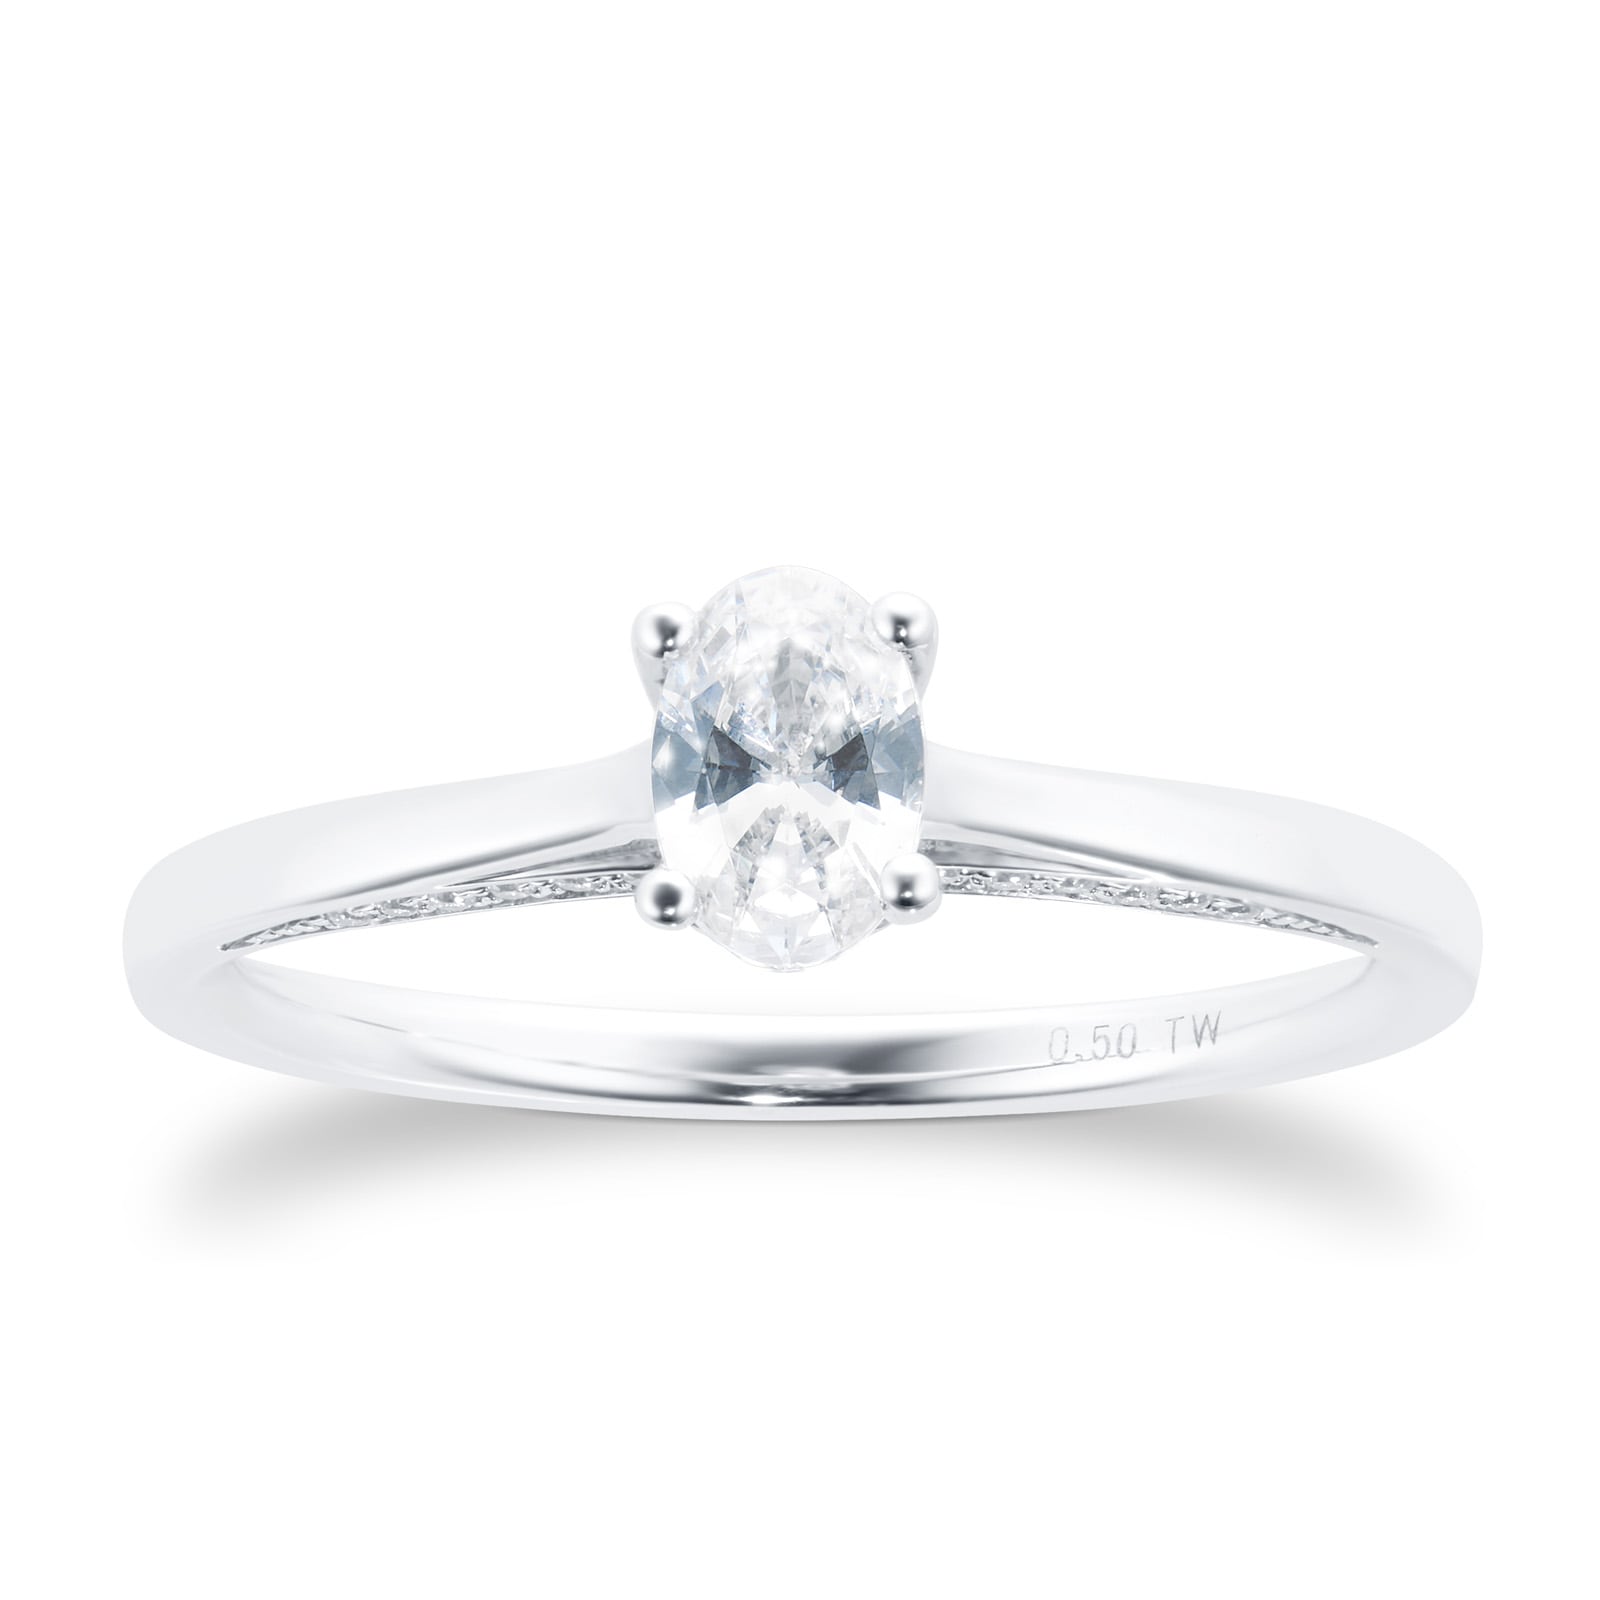 Platinum 0.50cttw Oval Cut Diamond Ring - Ring Size I